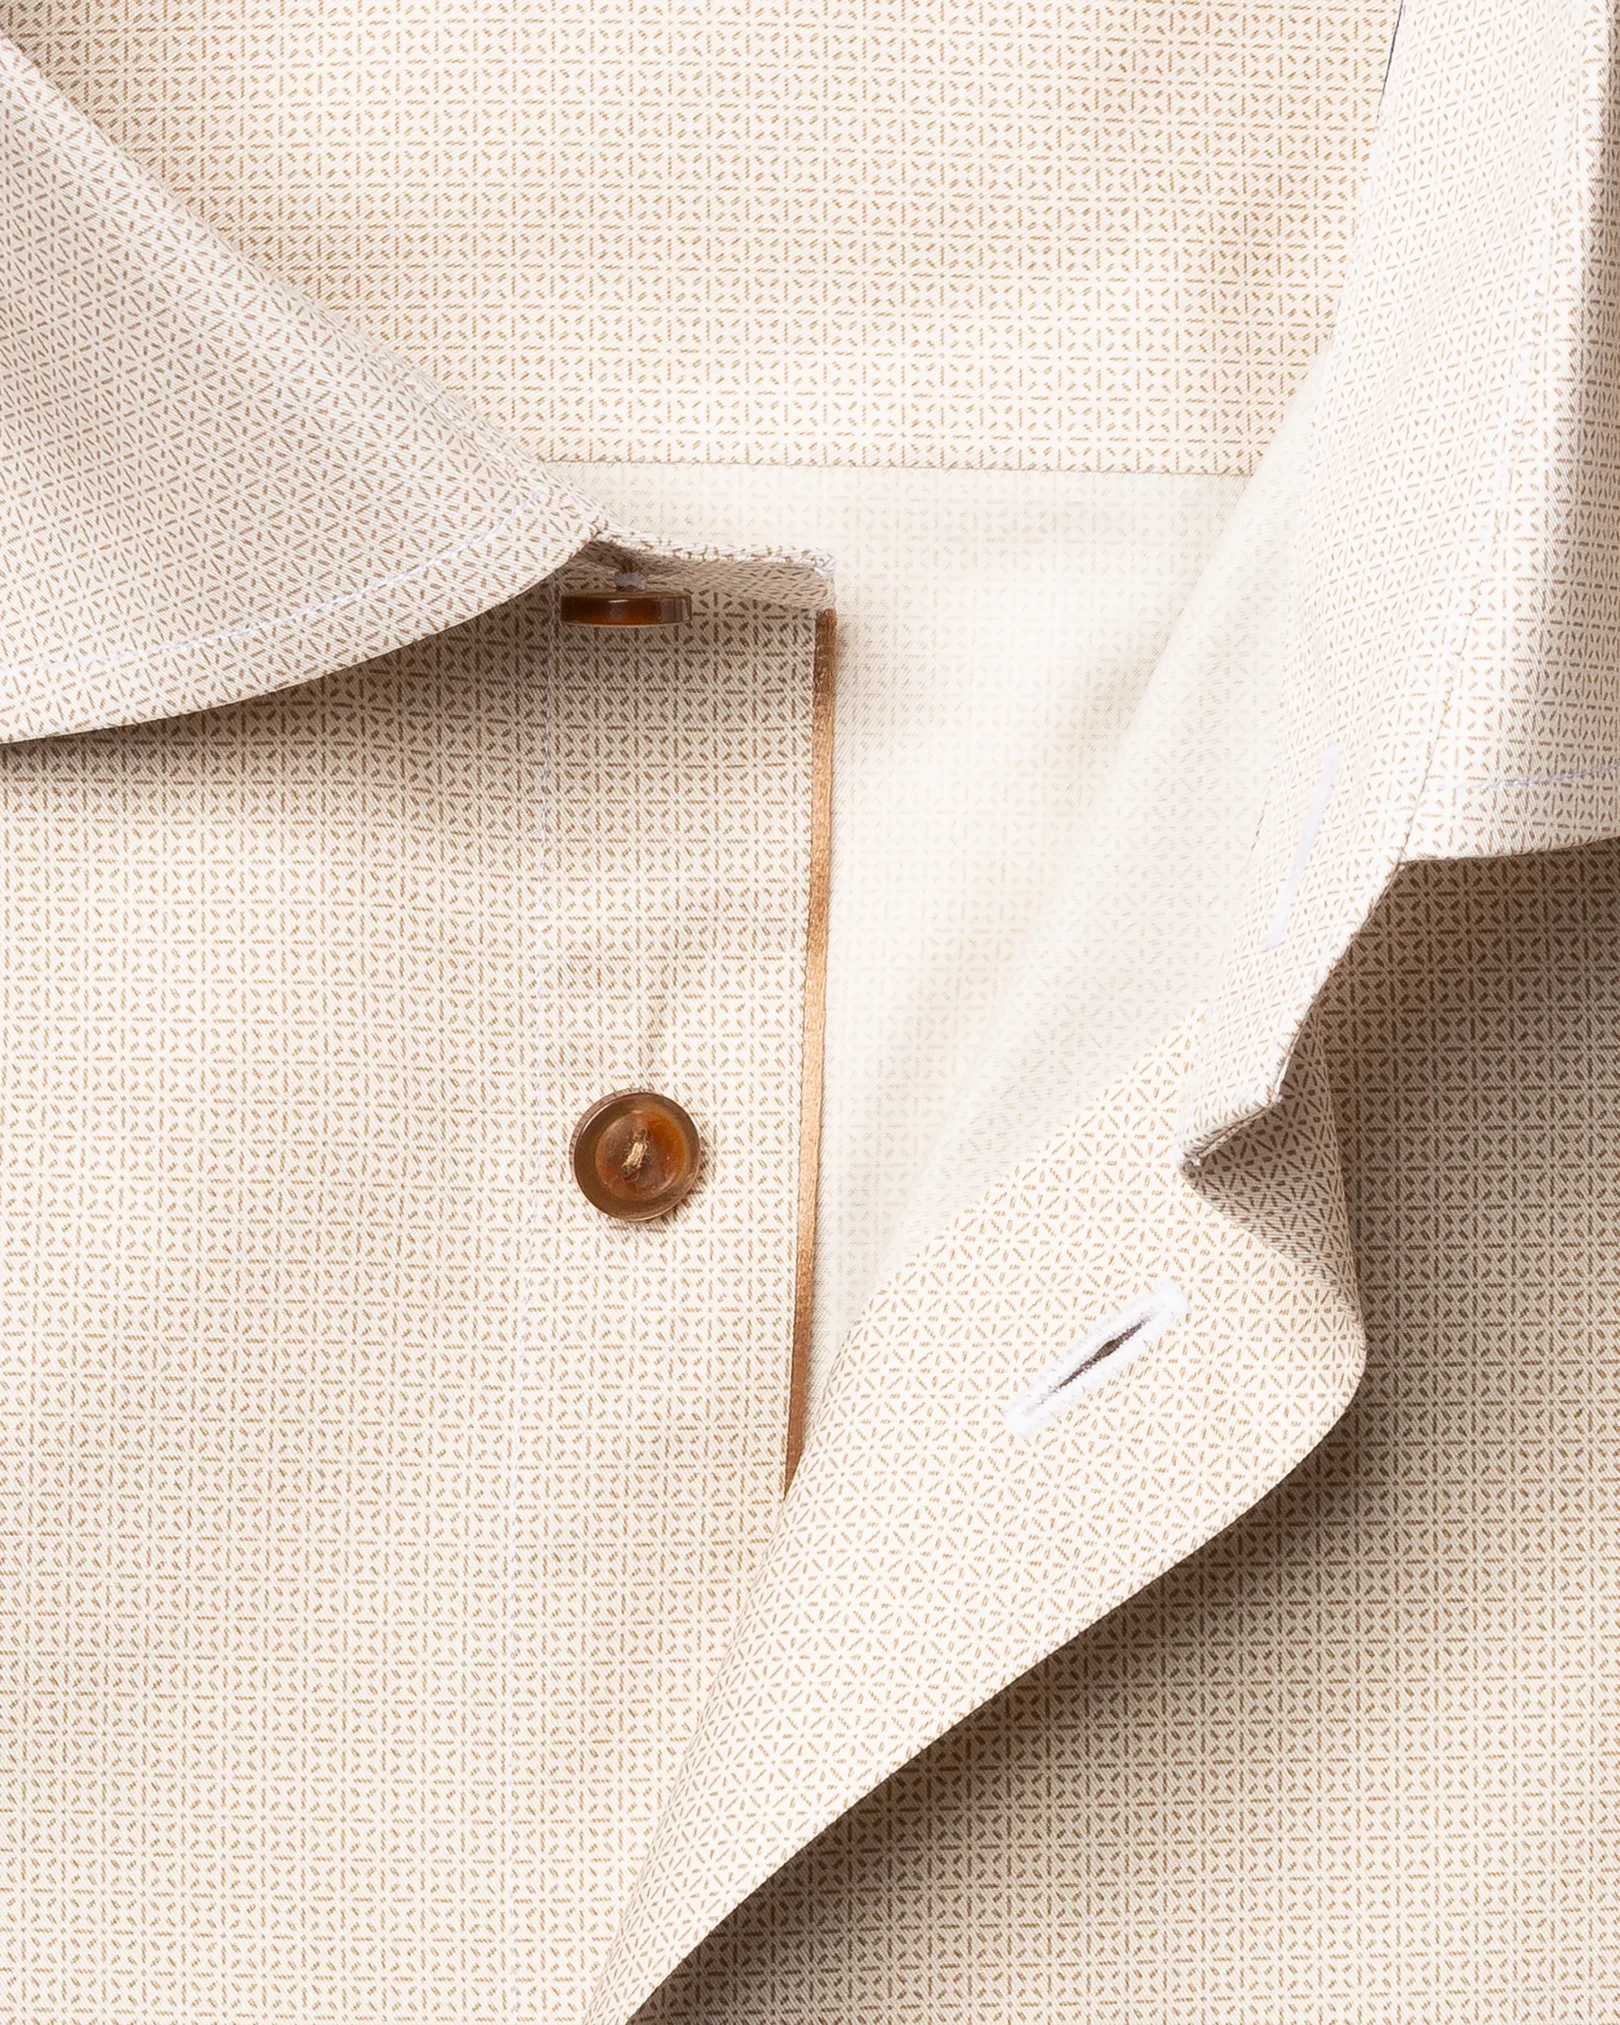 Eton - light brown micro pattern fine twill shirt